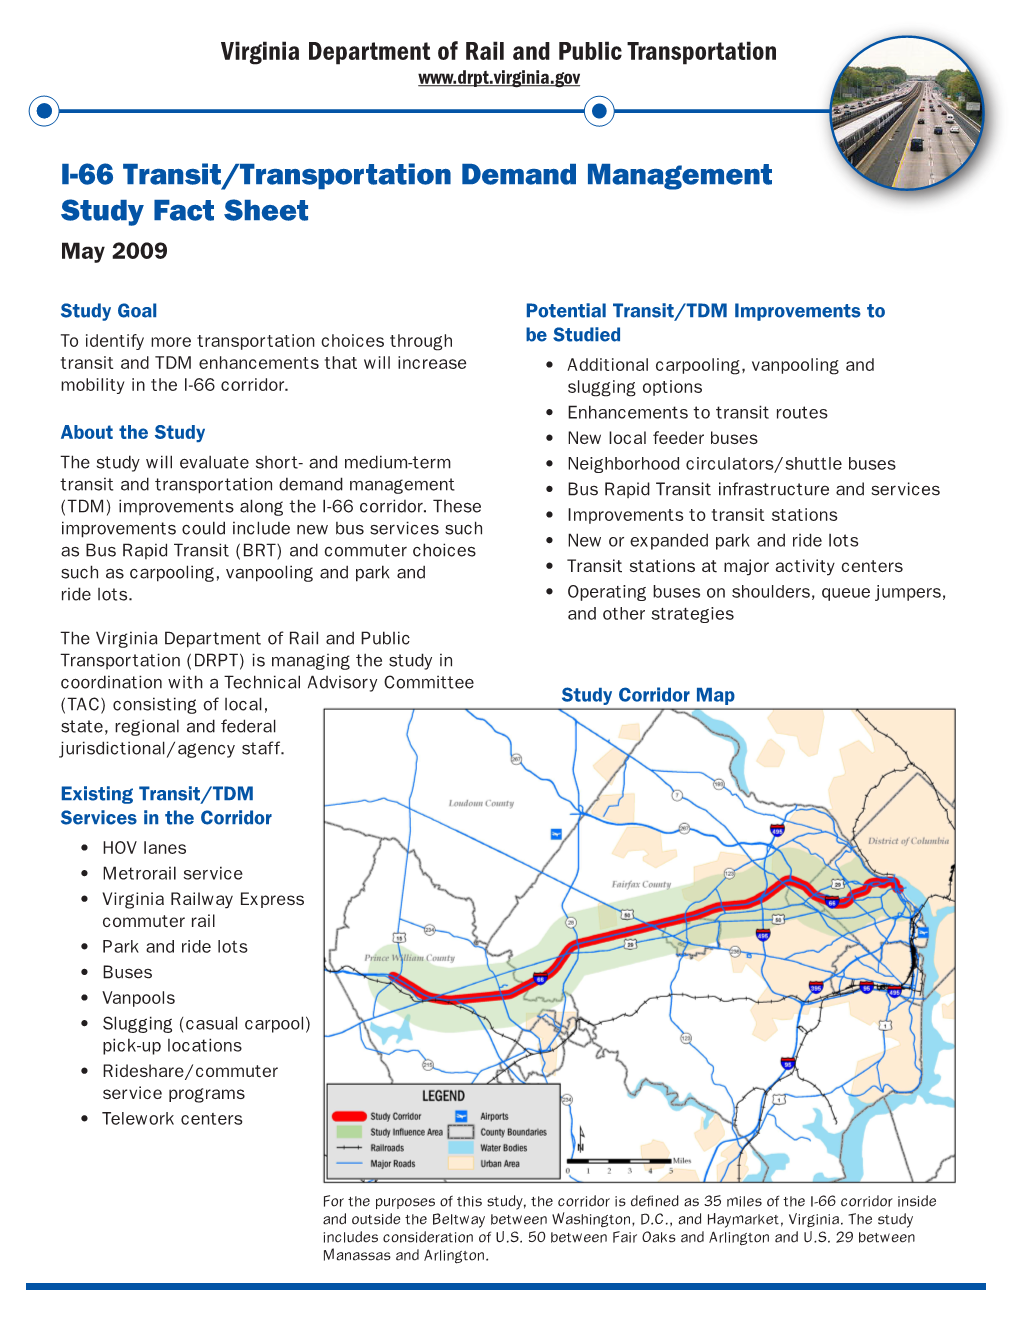 I-66 Transit/Transportation Demand Management Study Fact Sheet